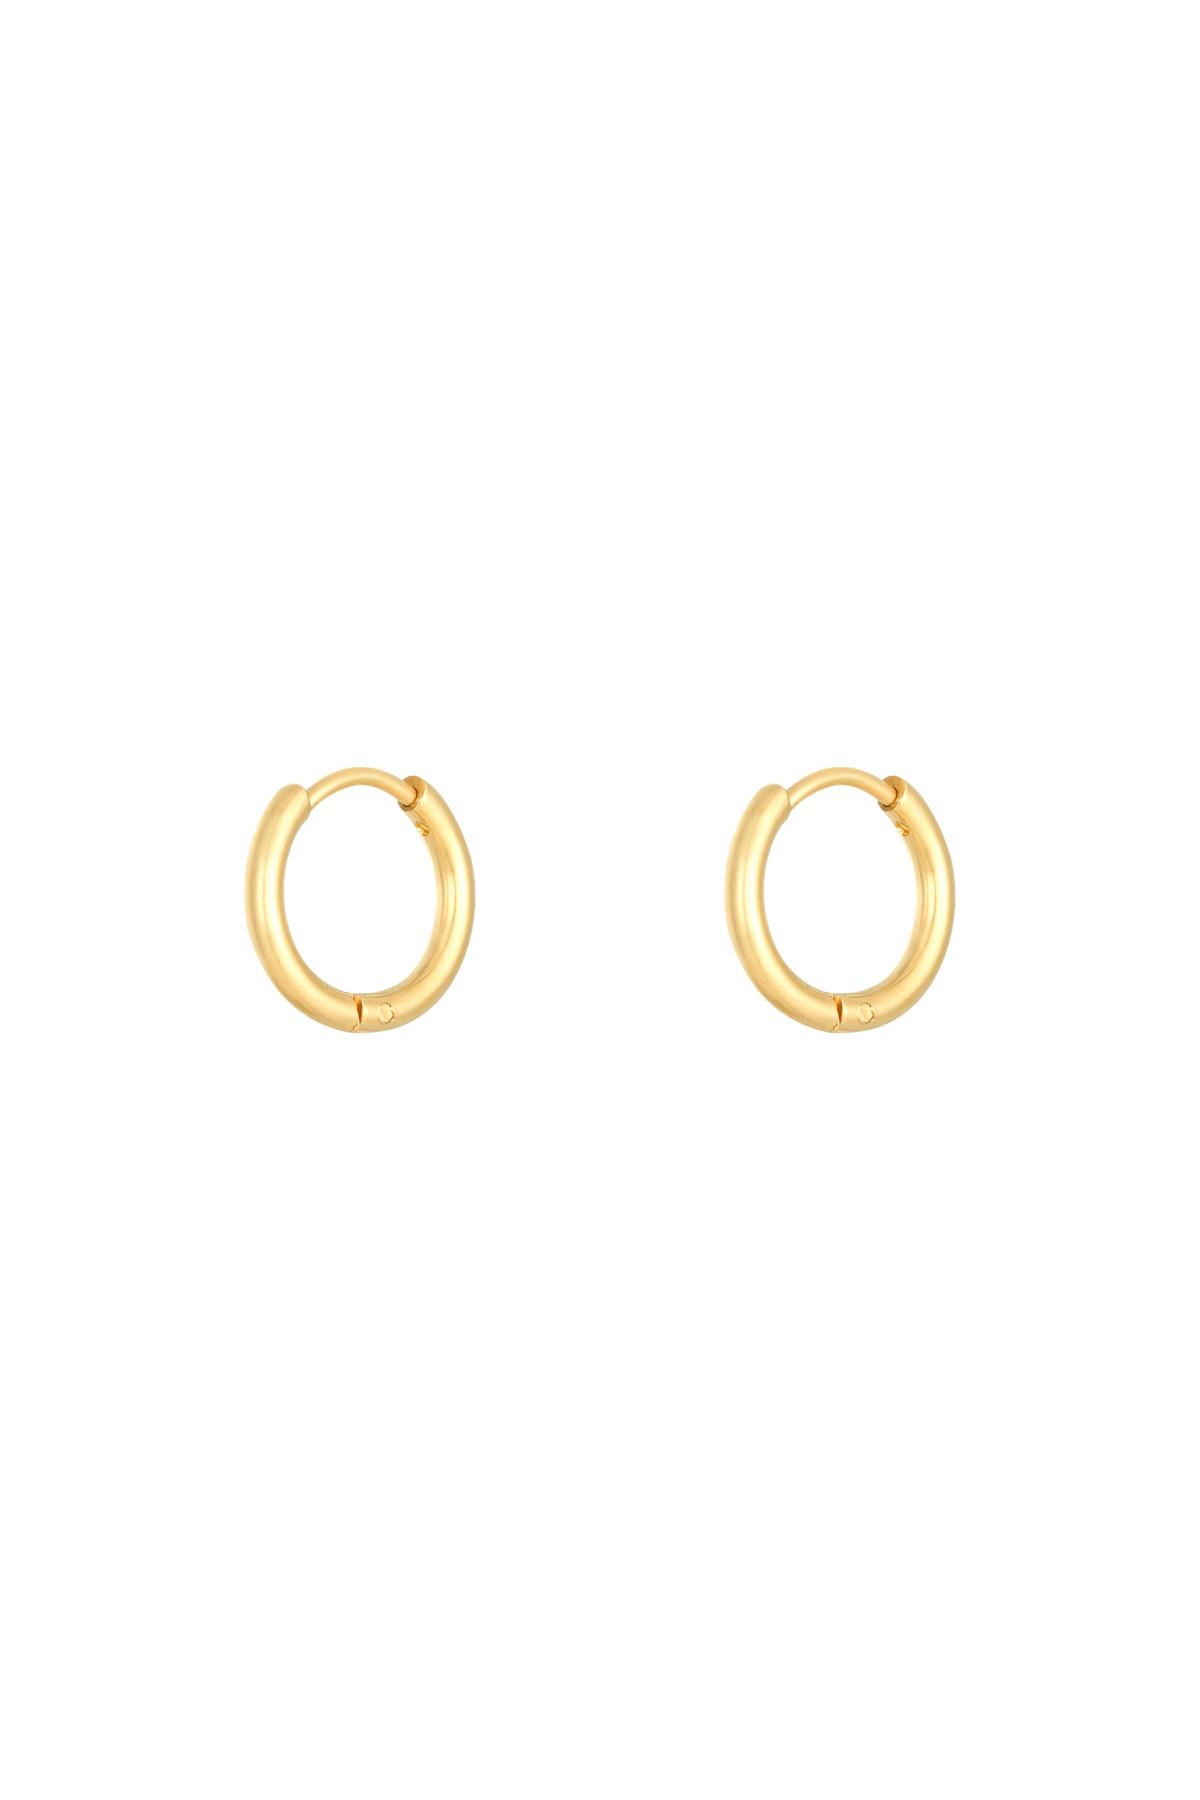 Earrings Little Hoops 1.4cm Gold Stainless Steel